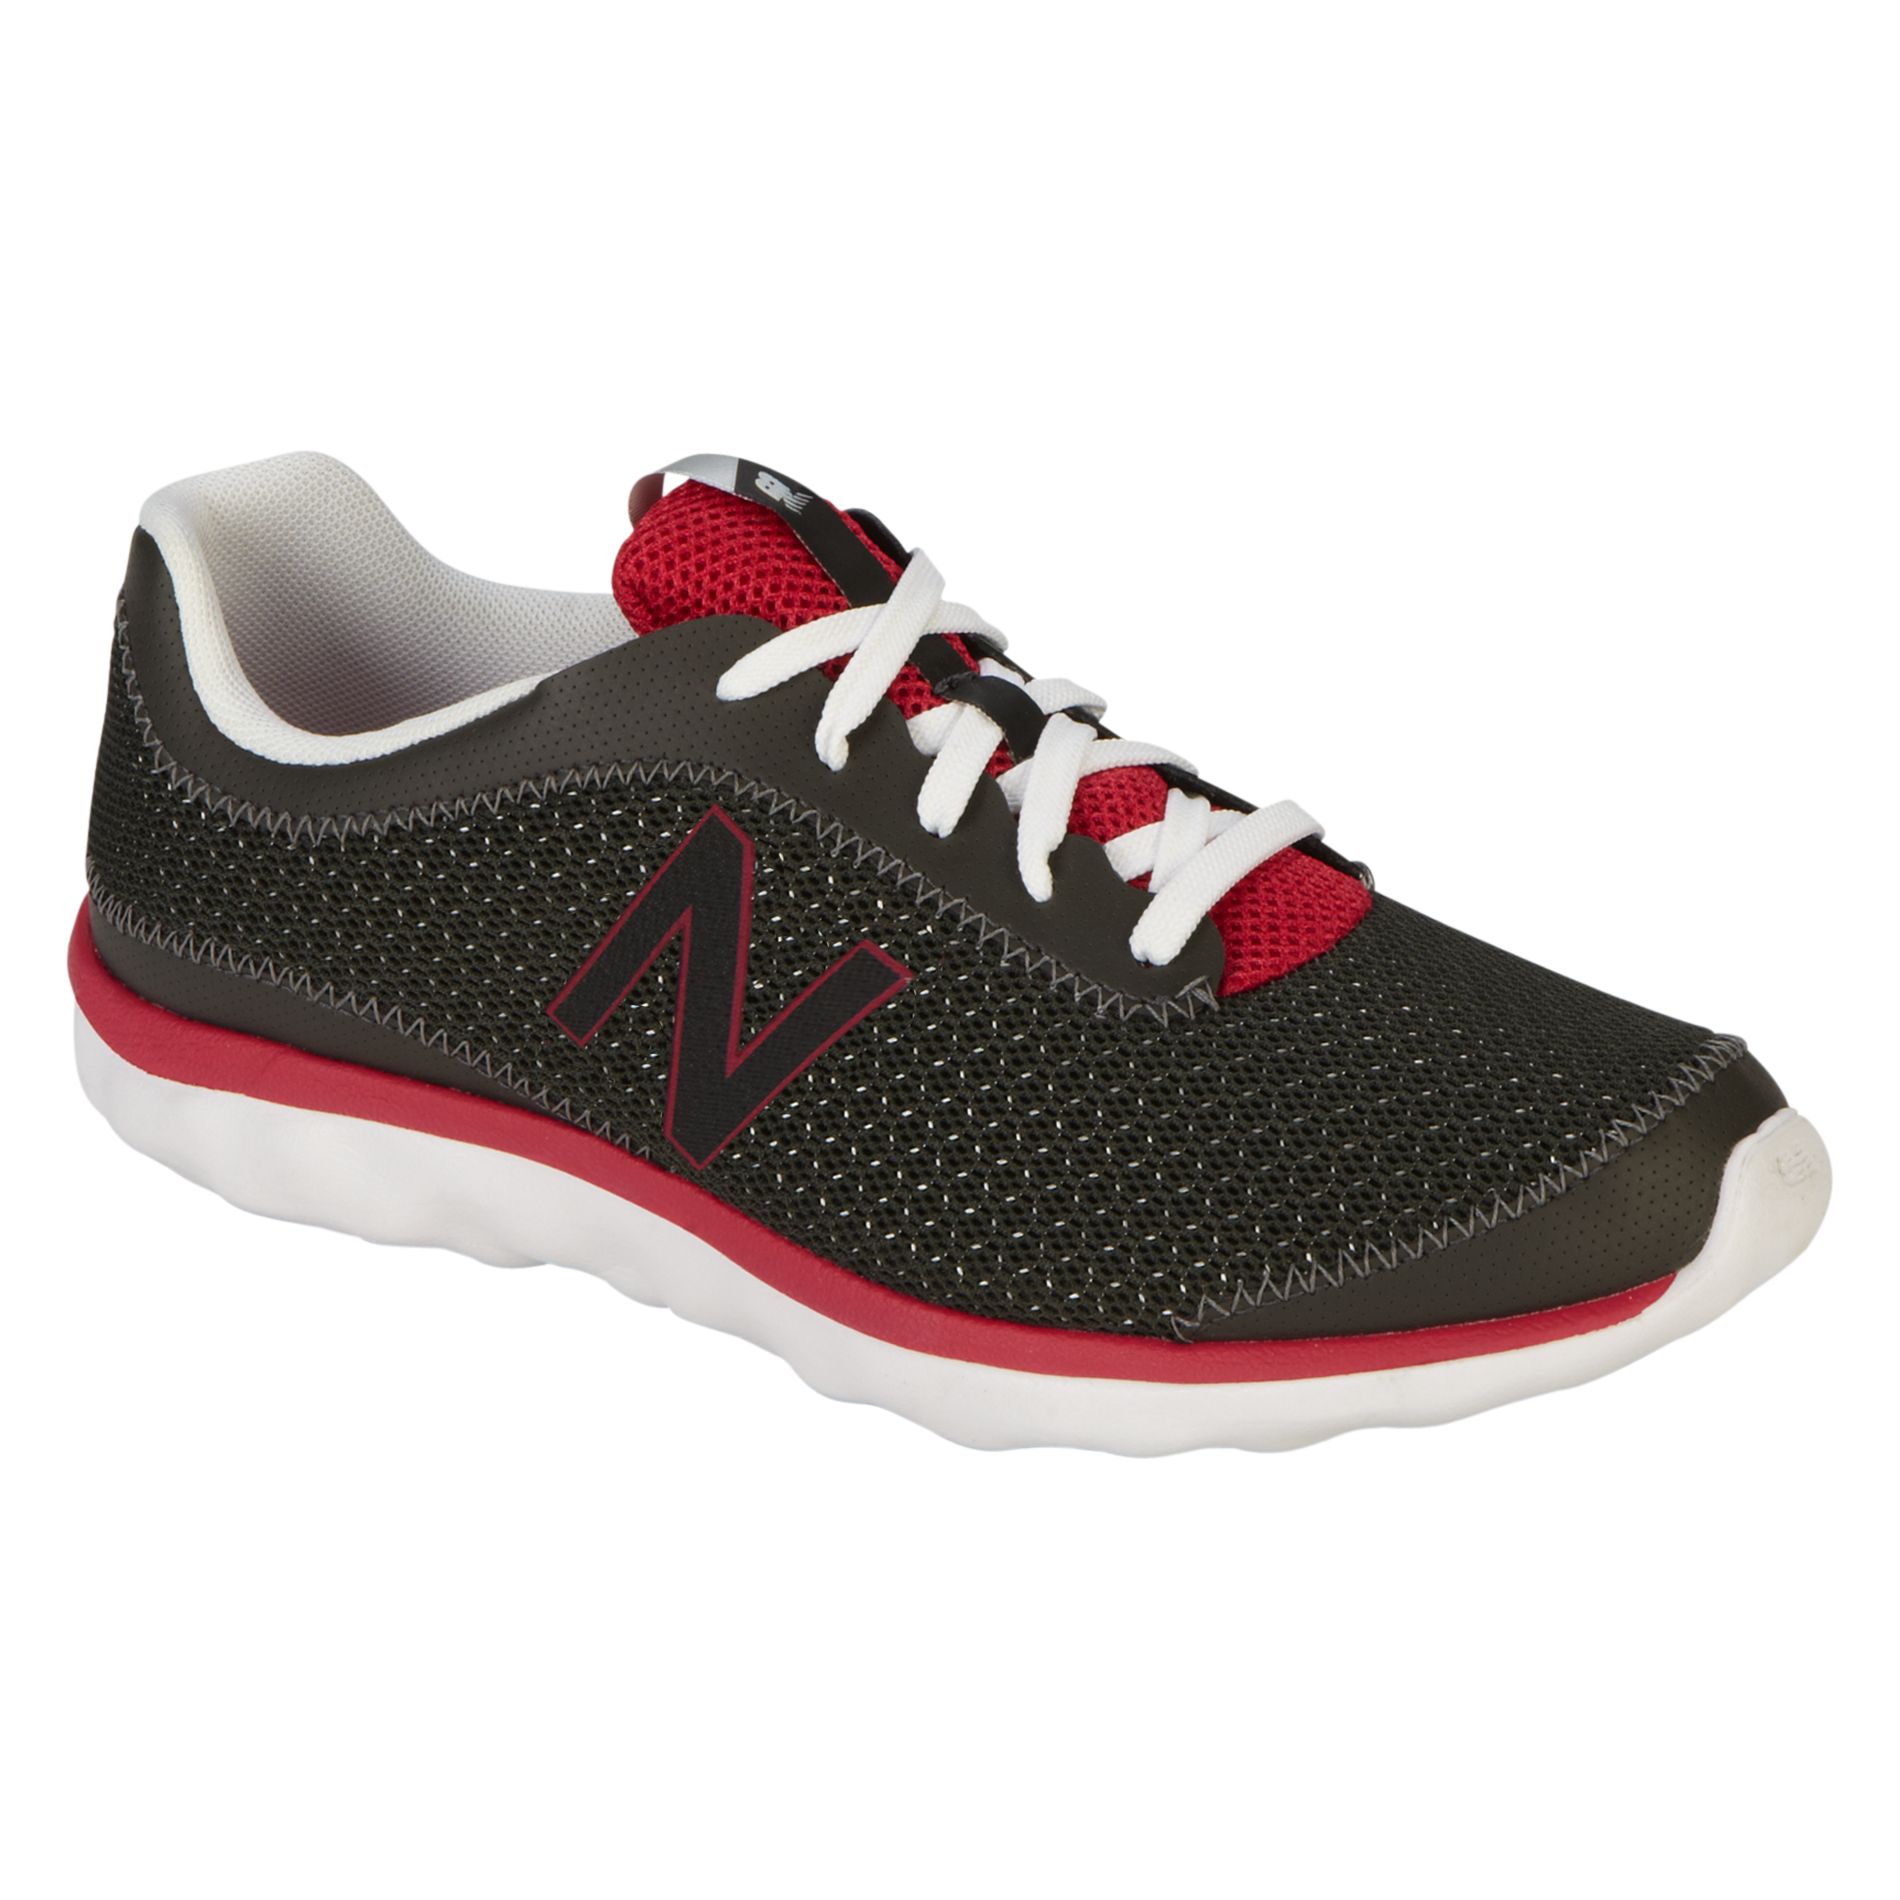 New Balance Women's 695 Walking Athletic Shoe - Black/Pink